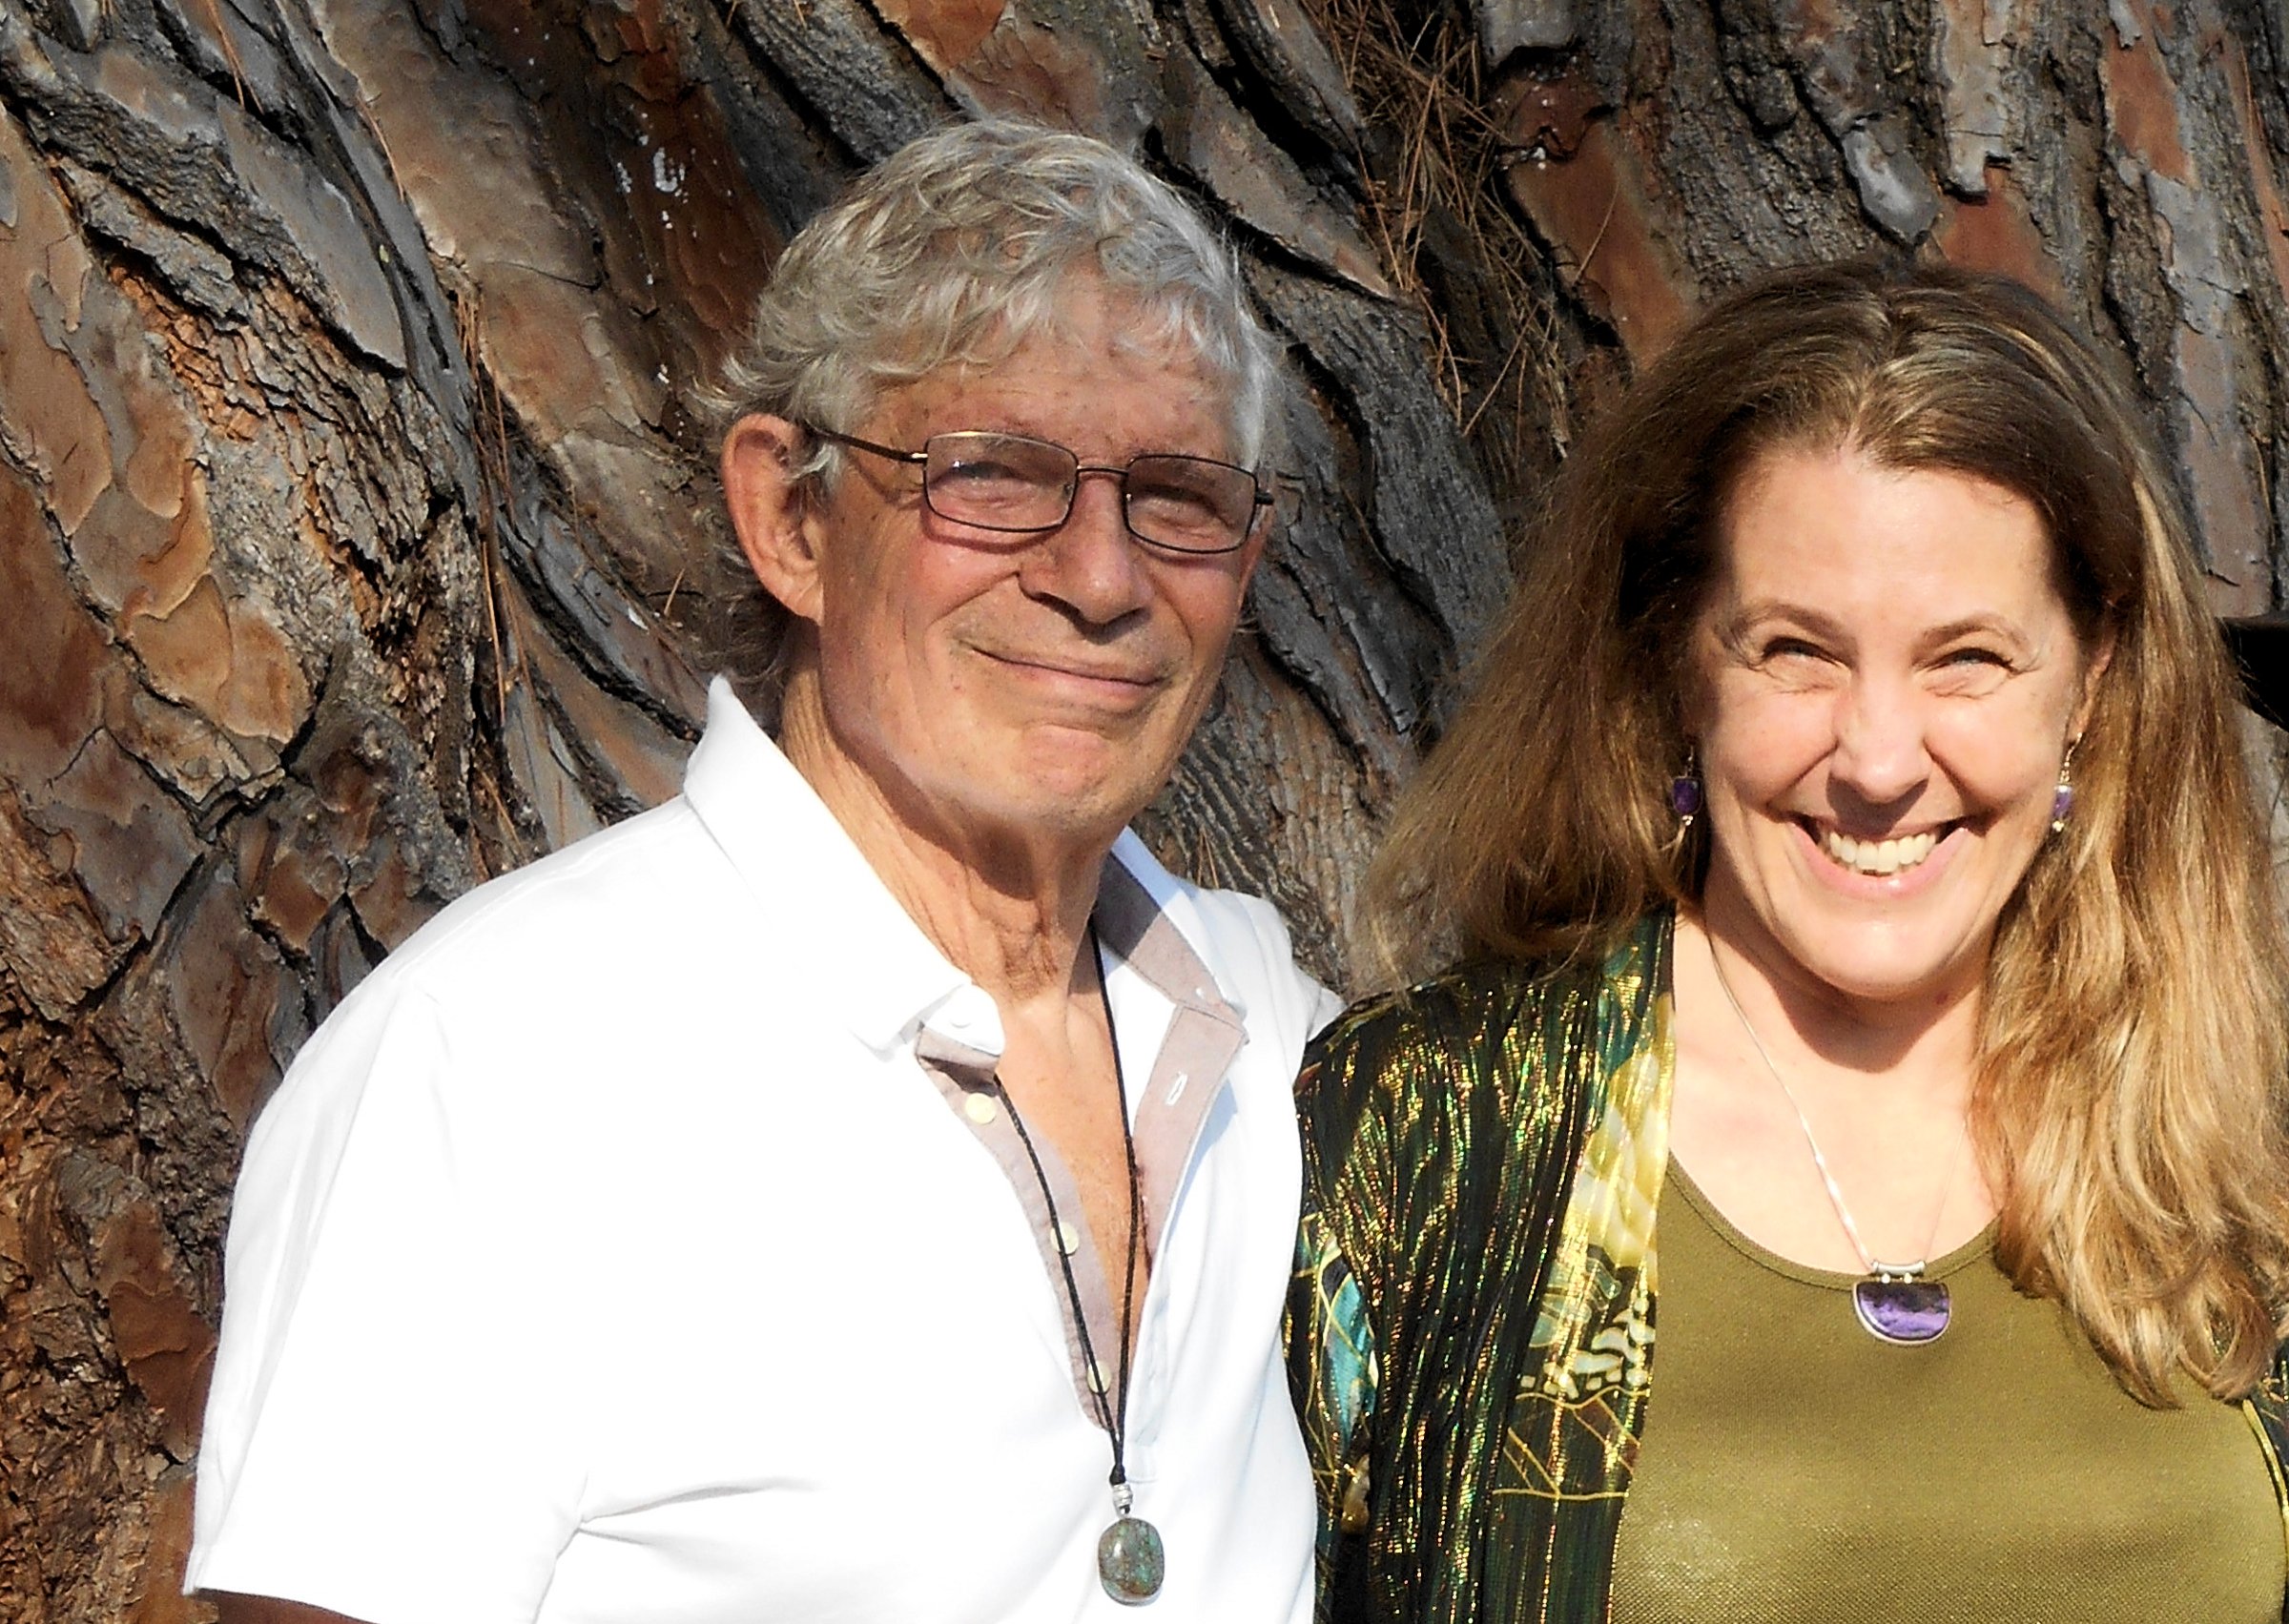 Stuart Kauffman and Cynthia Sue Larson at UC Berkeley, August 15, 2015